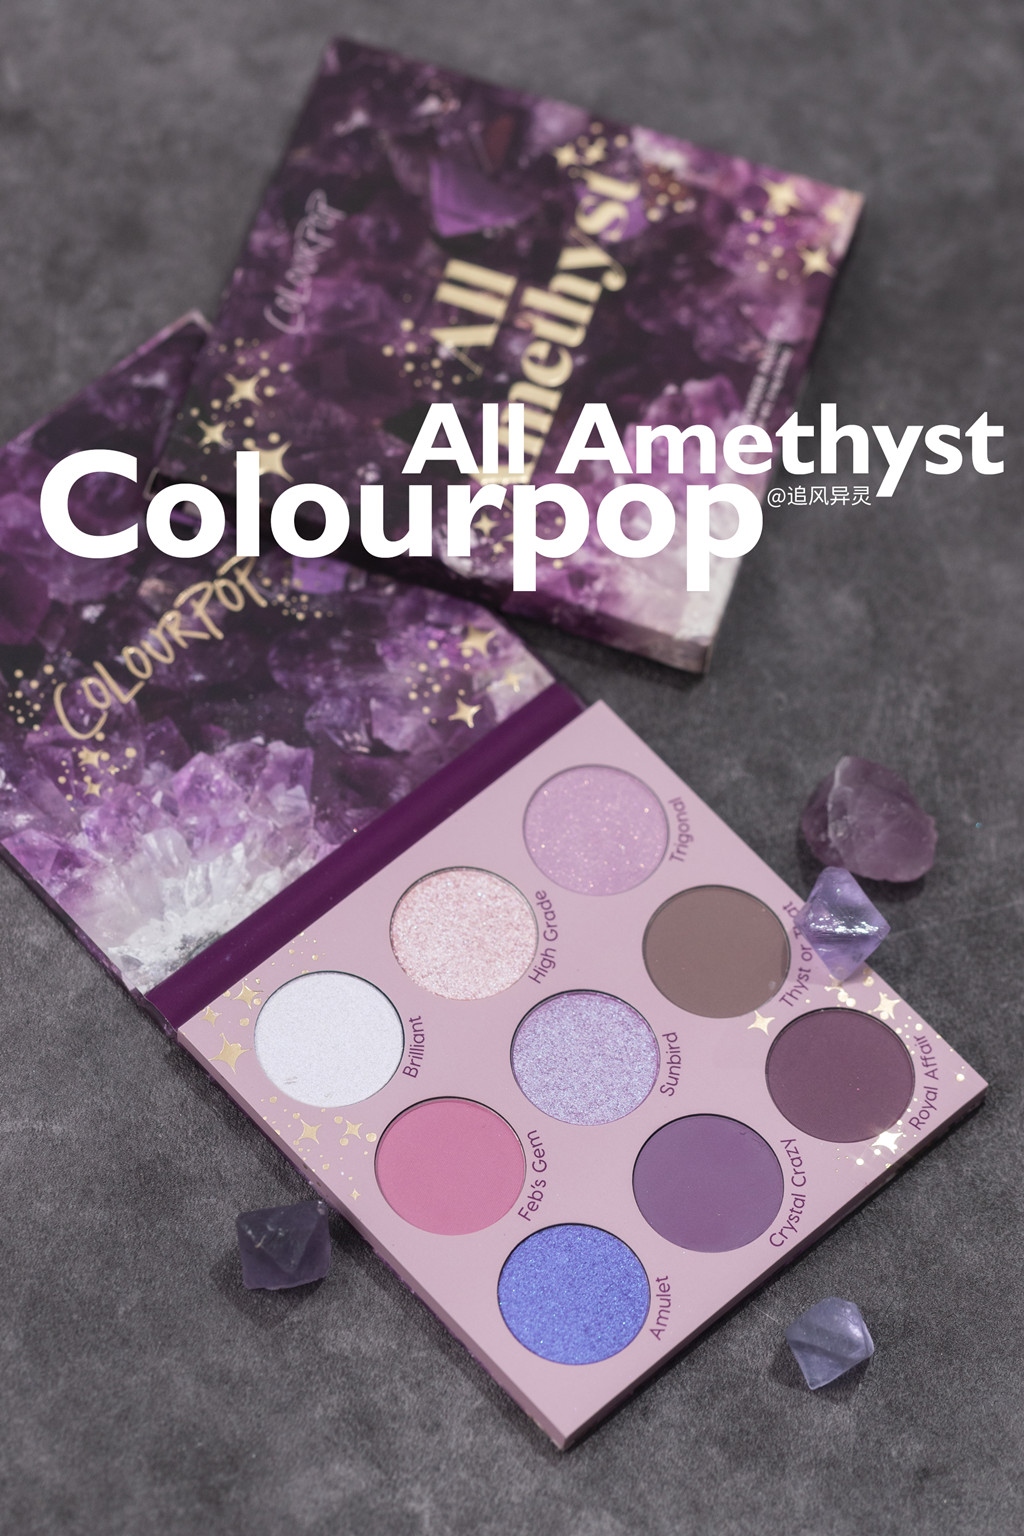 Colourpop - All Amethyst 紫水晶盘试色